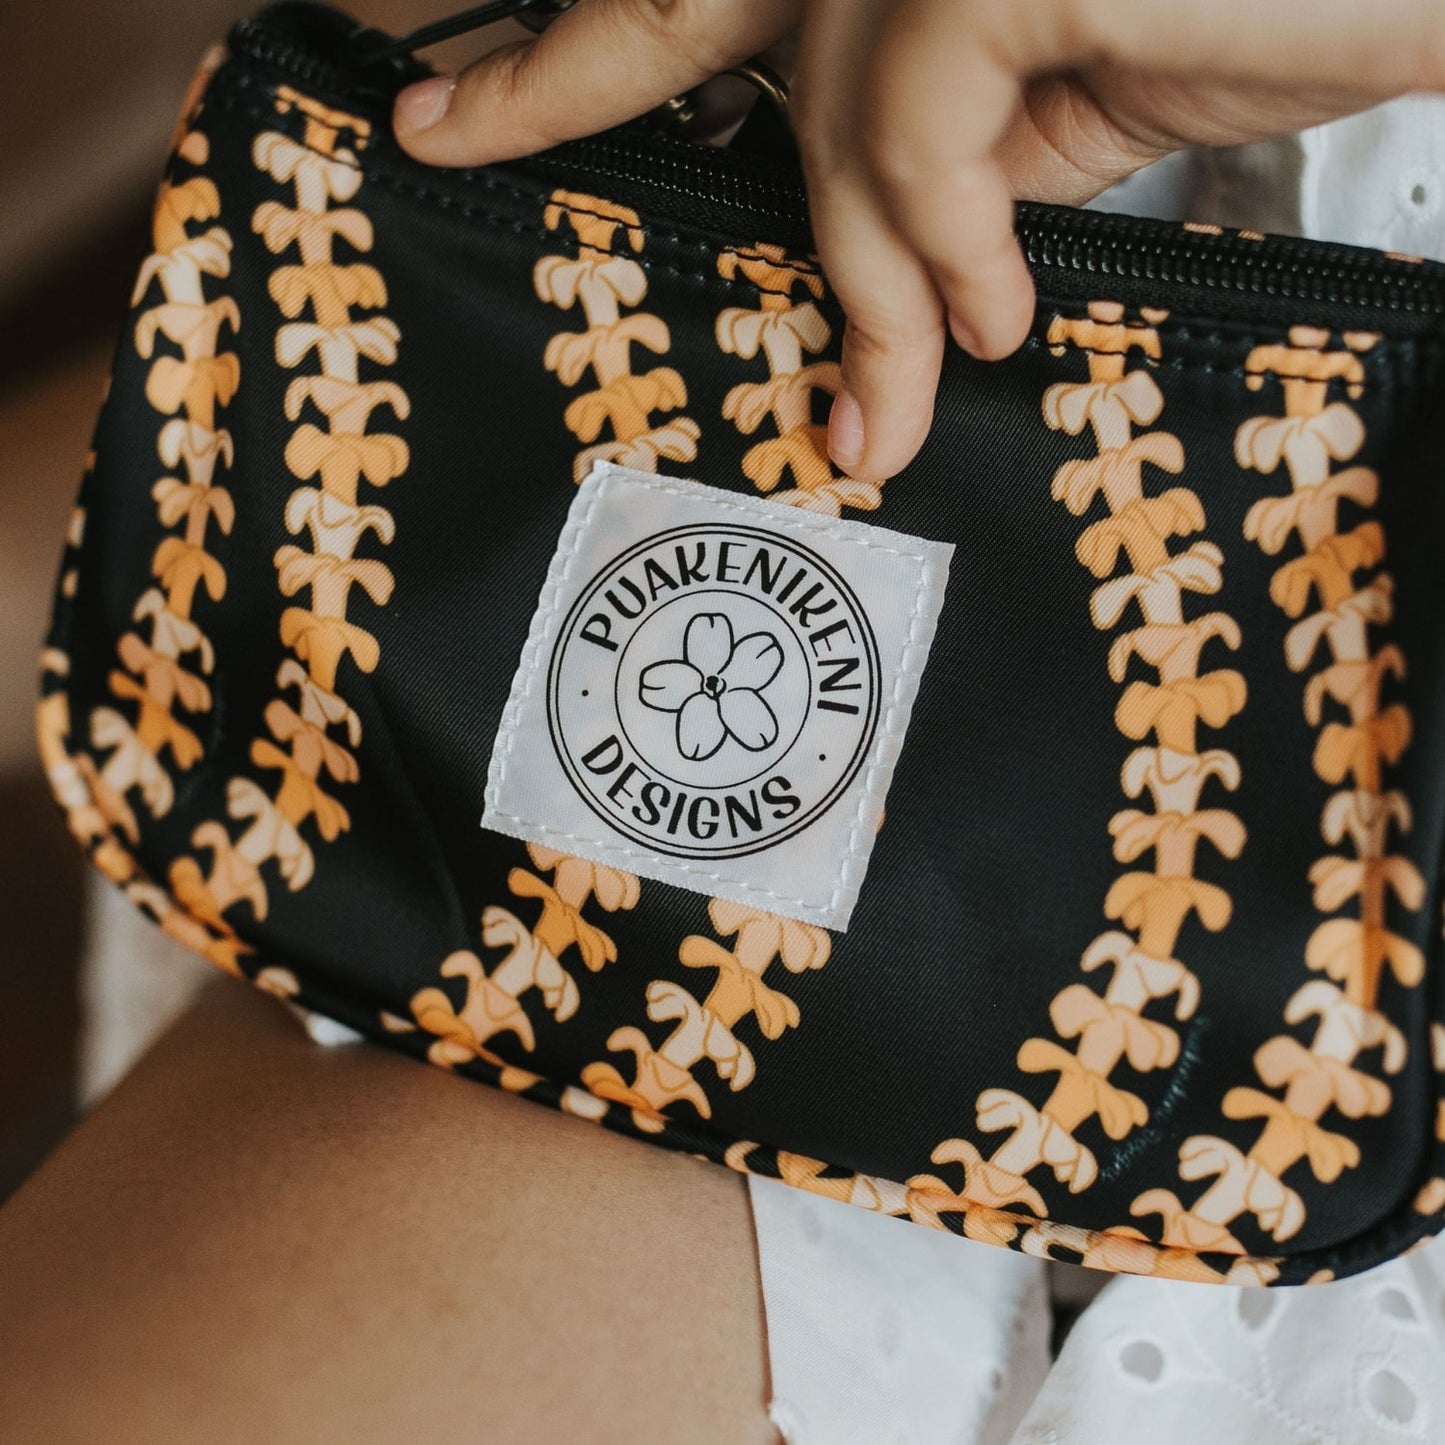 Mini Zipper Pouch - make-up bag, clutch, wristlet, with puakenikeni lei design from Puakenikeni Designs - model holding